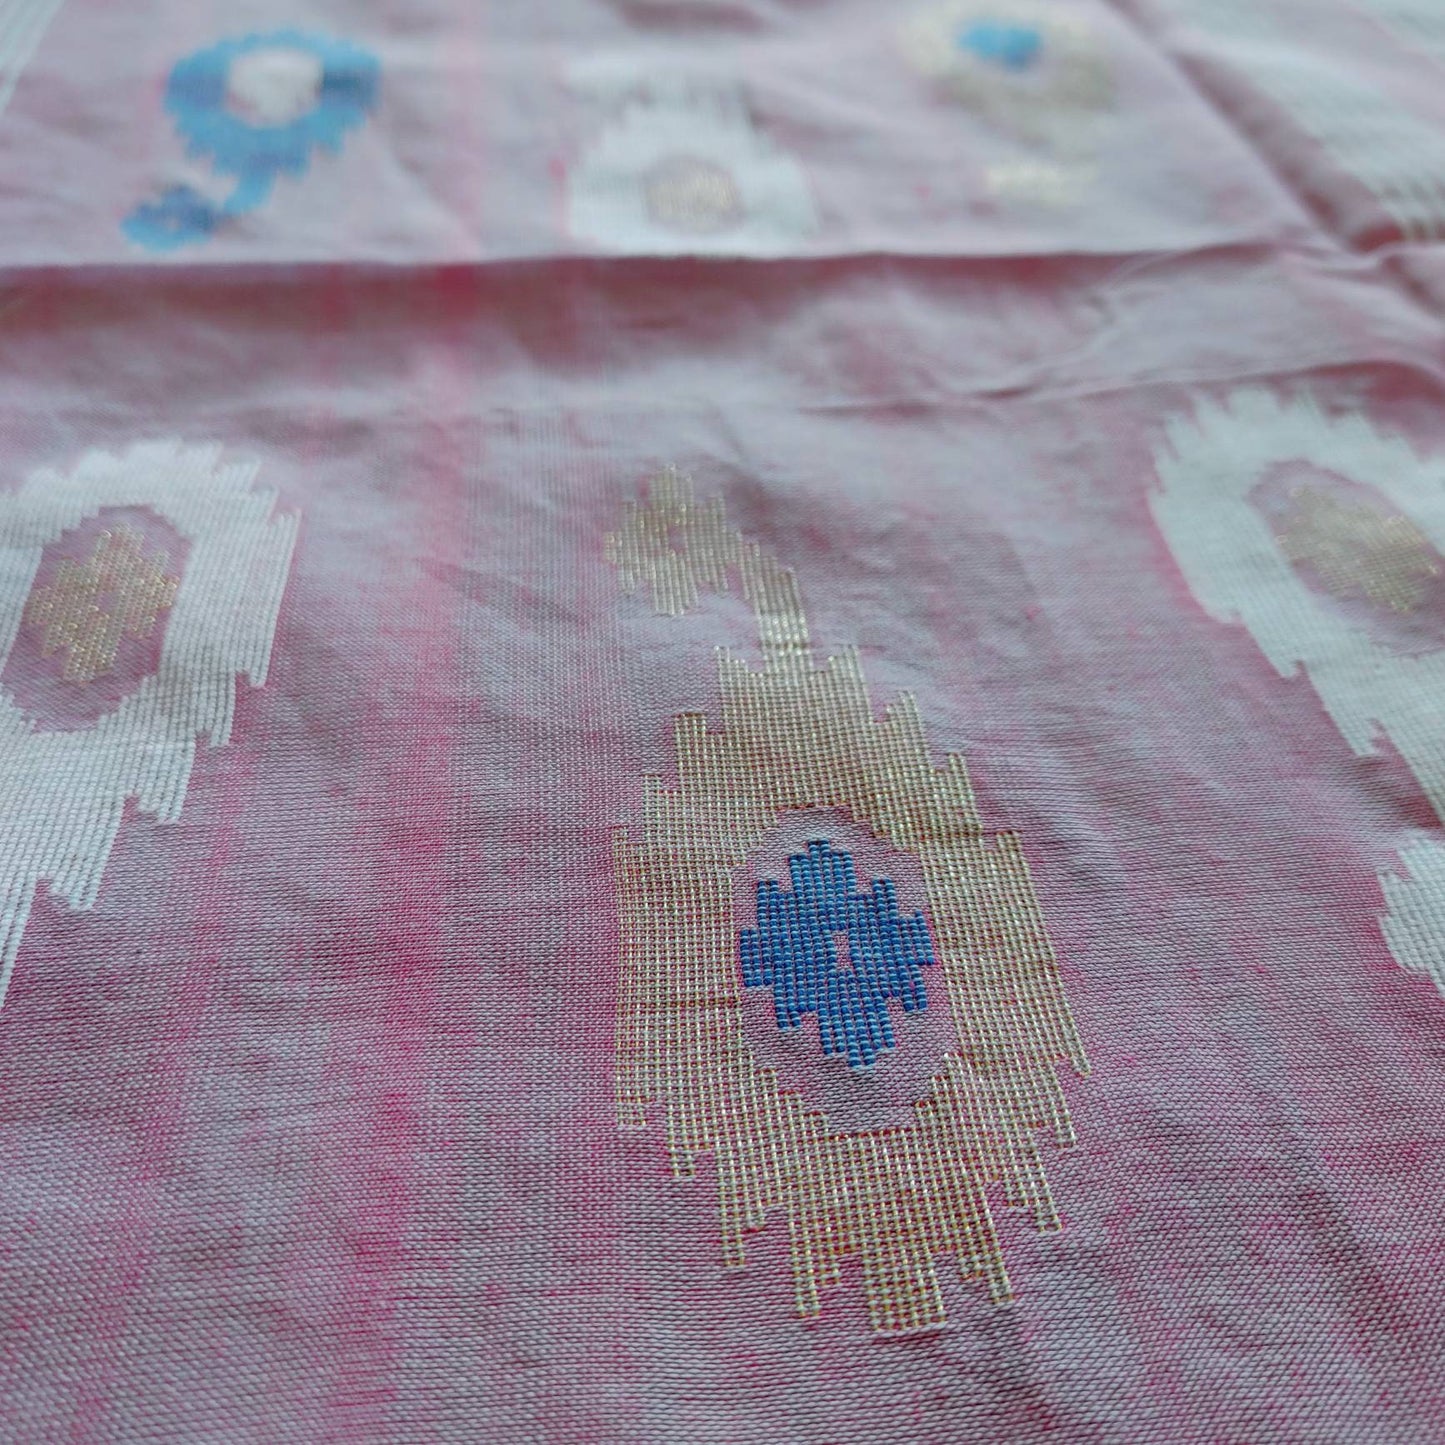 Dhakai Jamdani Dress, Original Handloom pure Cotton 2 piece, Pink and White Combination, Soft, Comfortable Summer Wear. Kamij and Dupatta